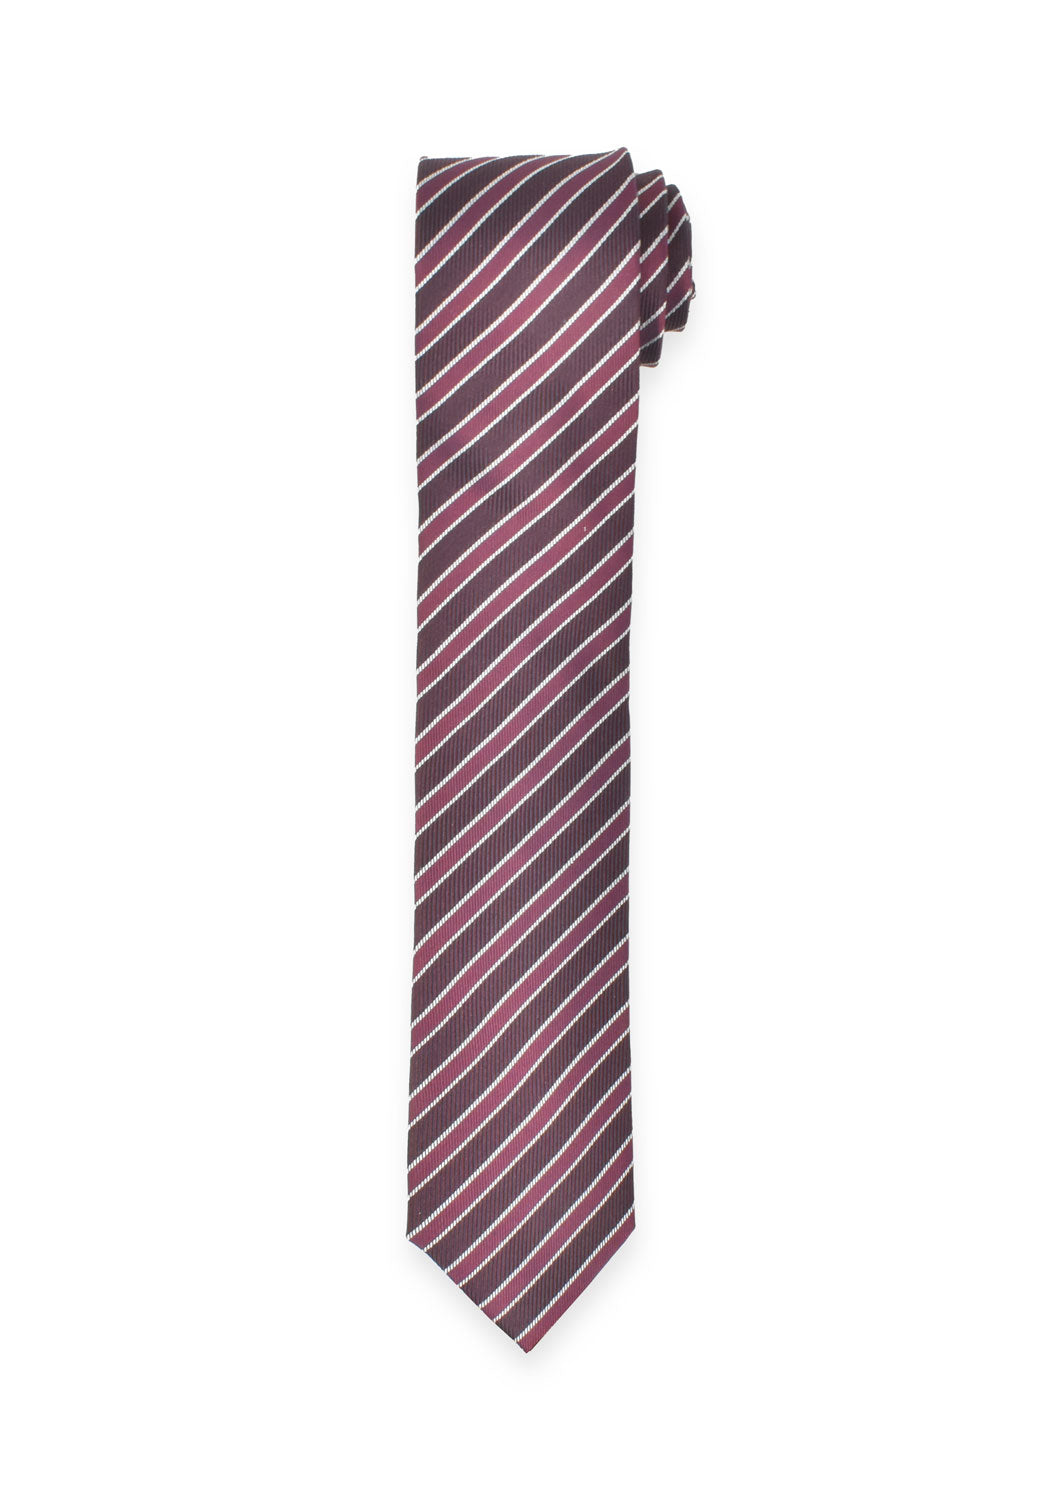 Krawatte Gestreift 6,5 cm